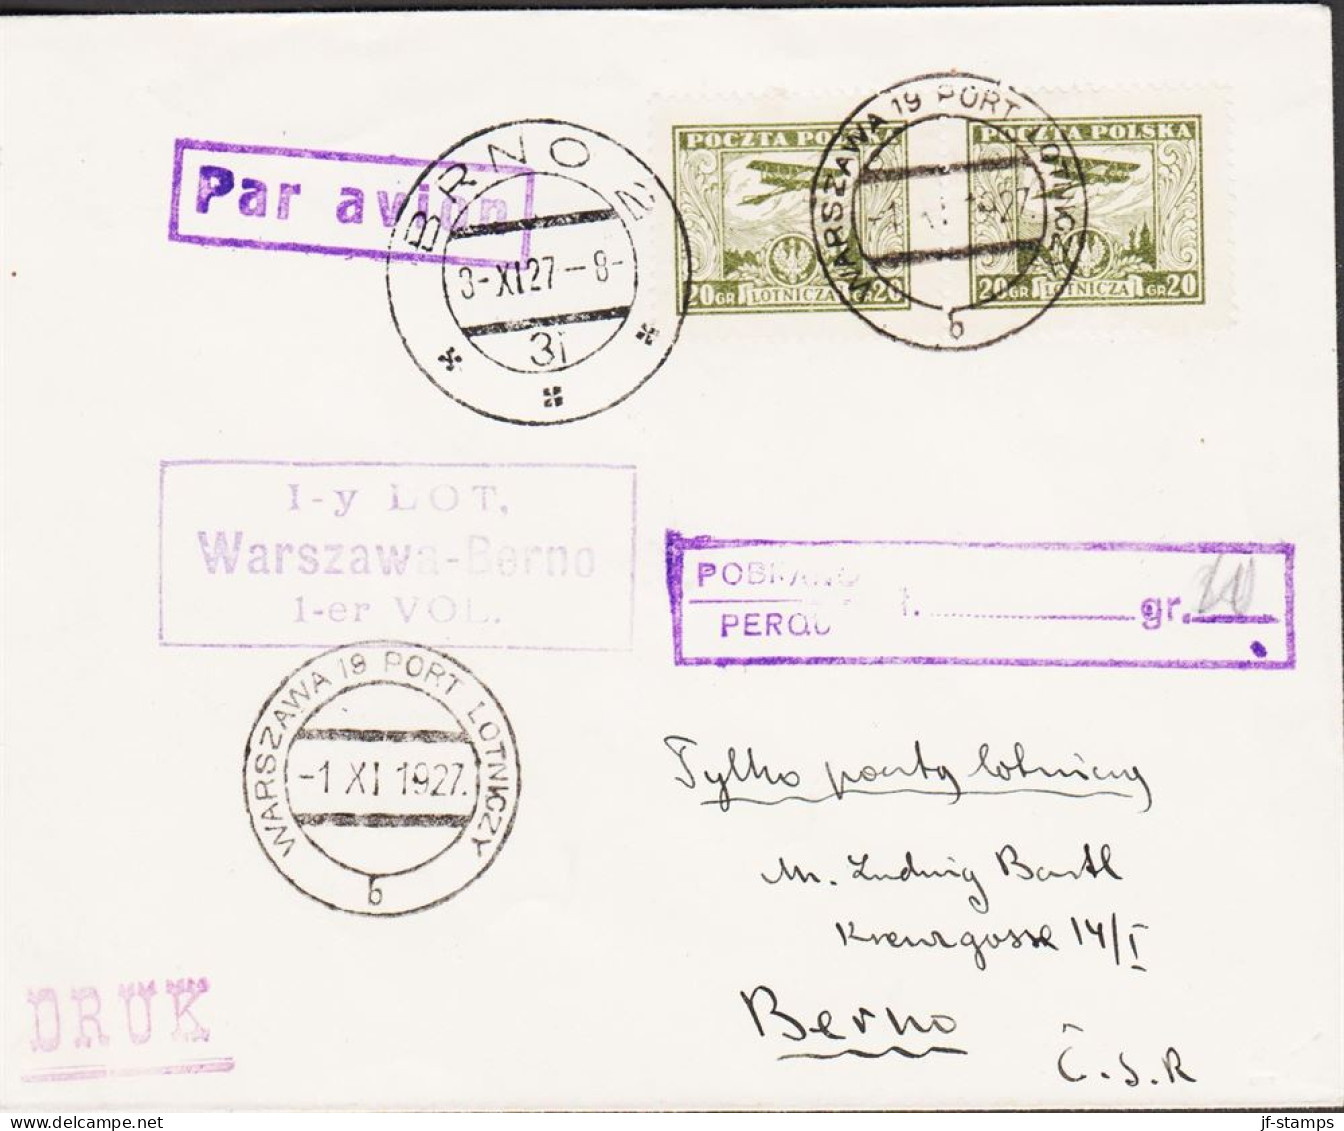 1927. POLSKA. Rare First Flight I-y LOT, Warszawa-Berno 1-er VOL With Pair 20 GR Airplane LVG... (Michel 230) - JF542879 - Lettres & Documents